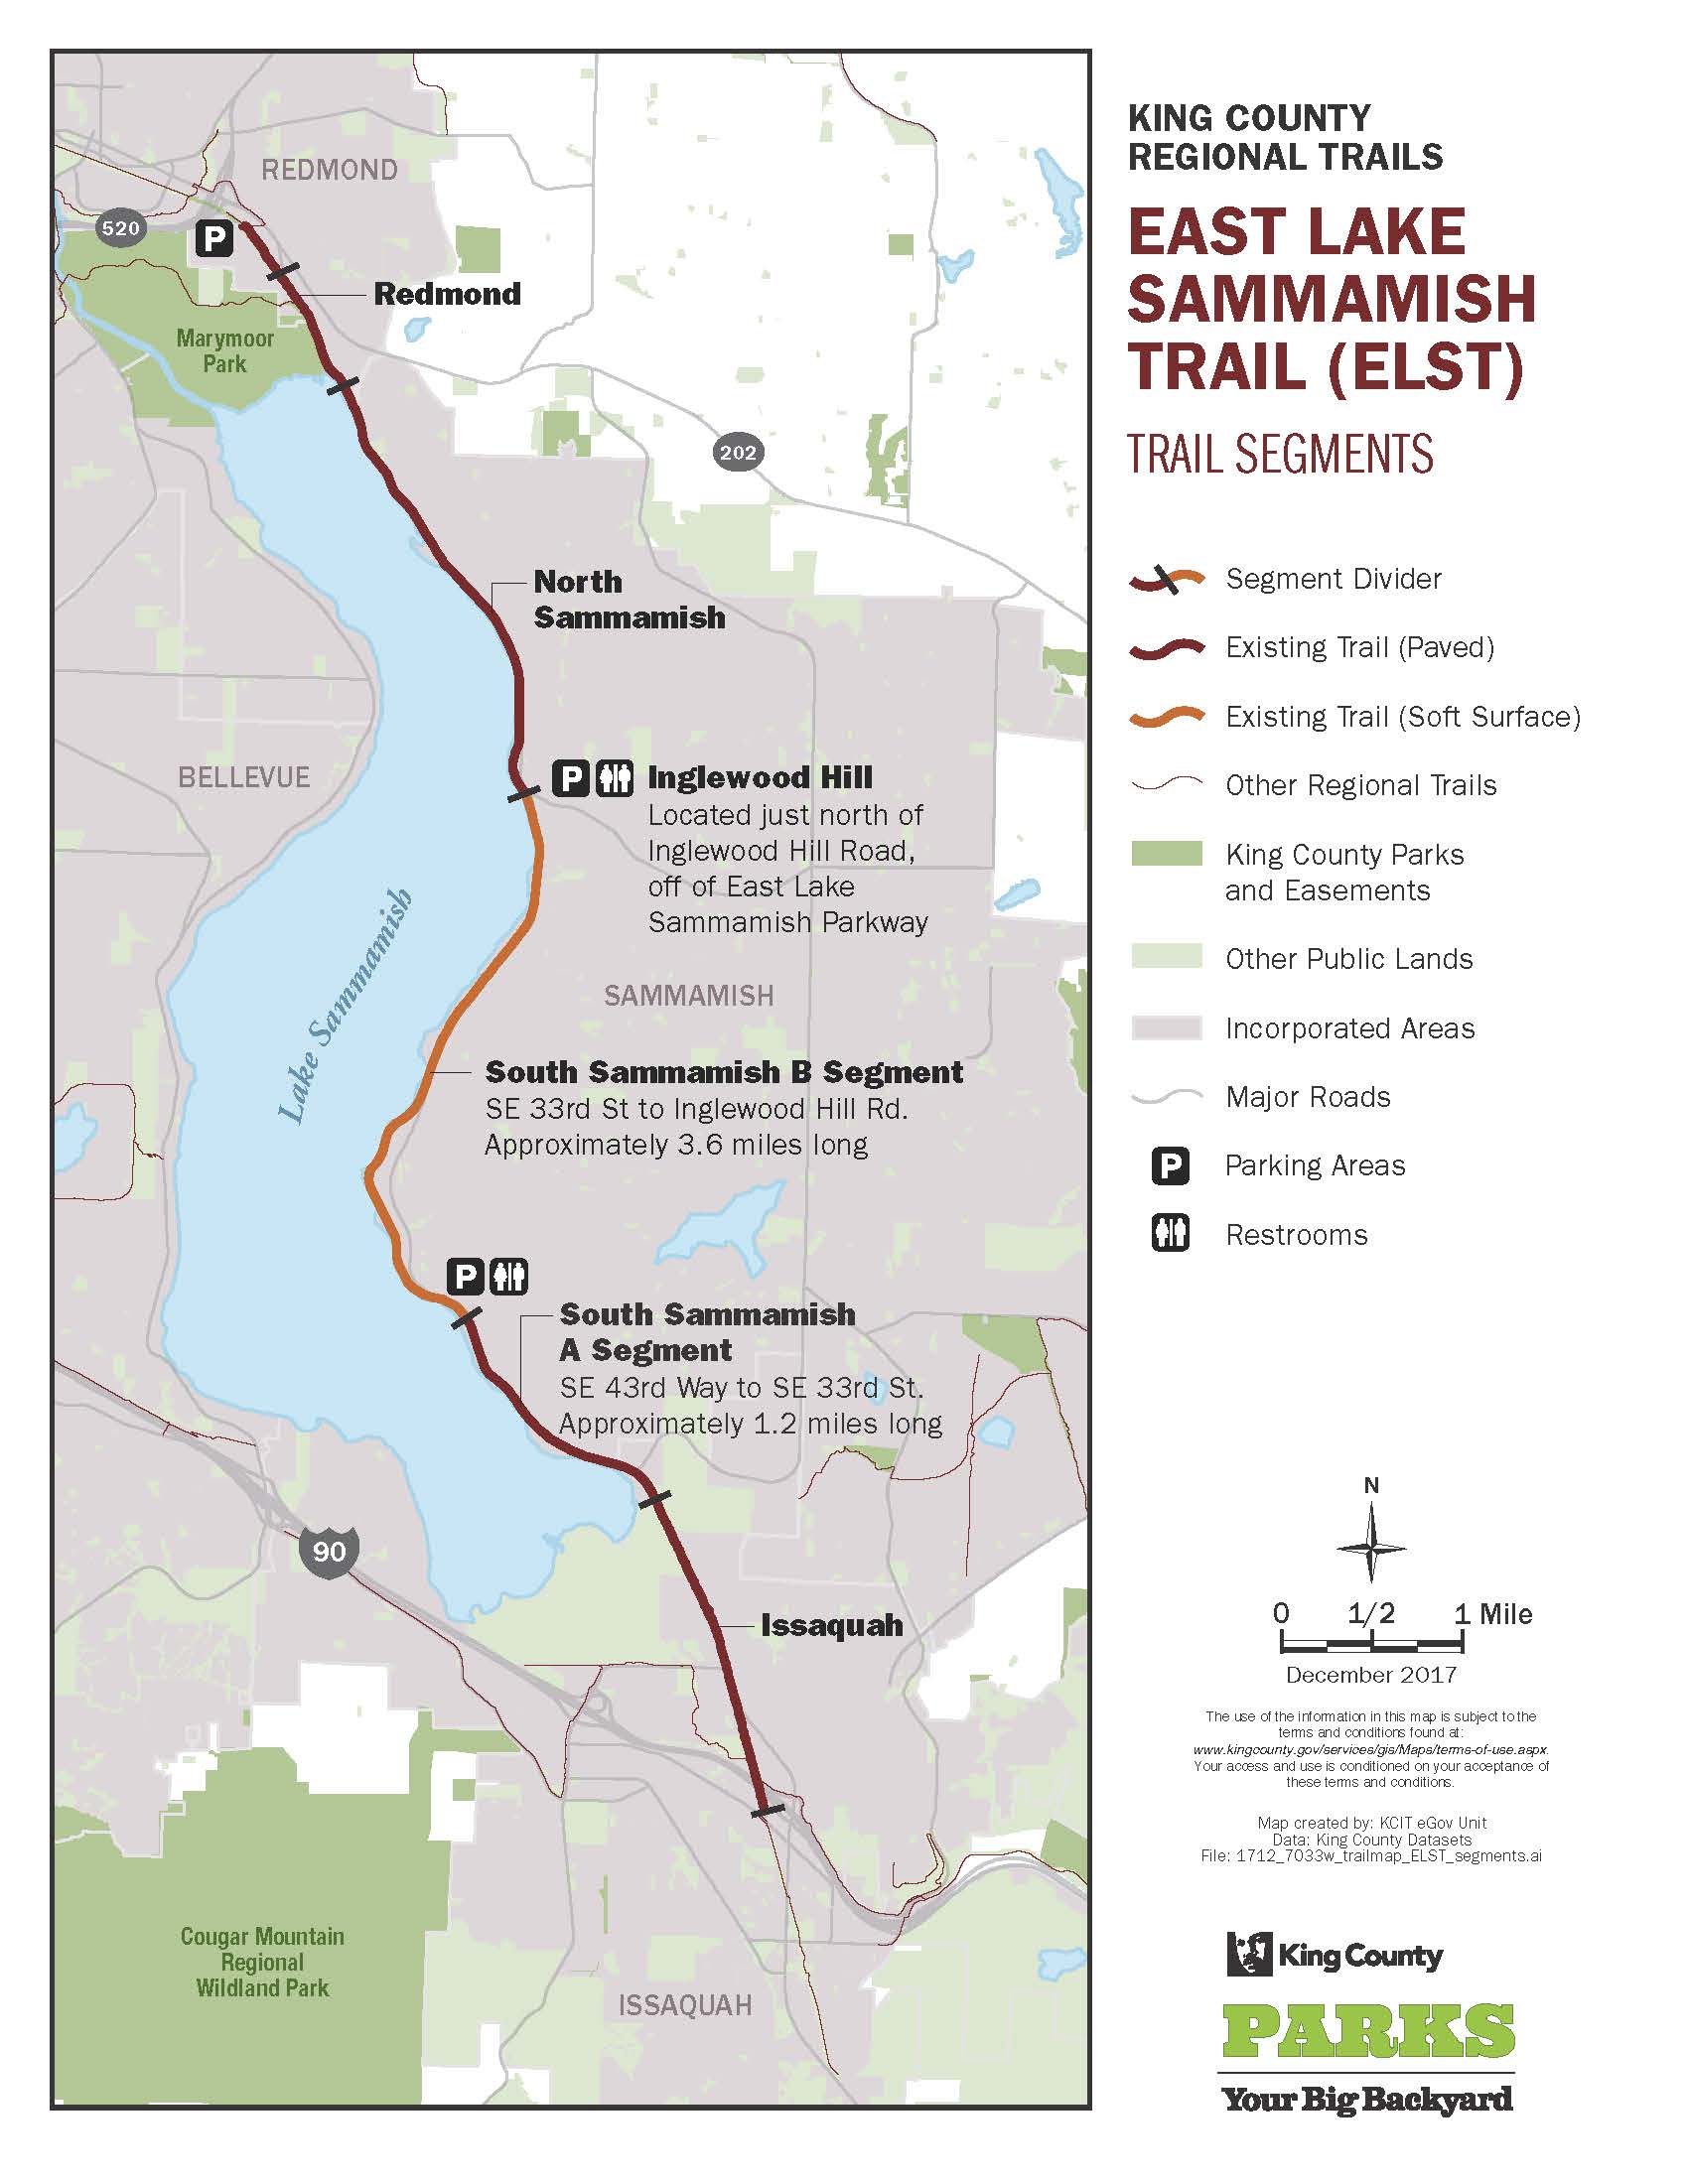 Map of East Lake Sammamish Trail Segments